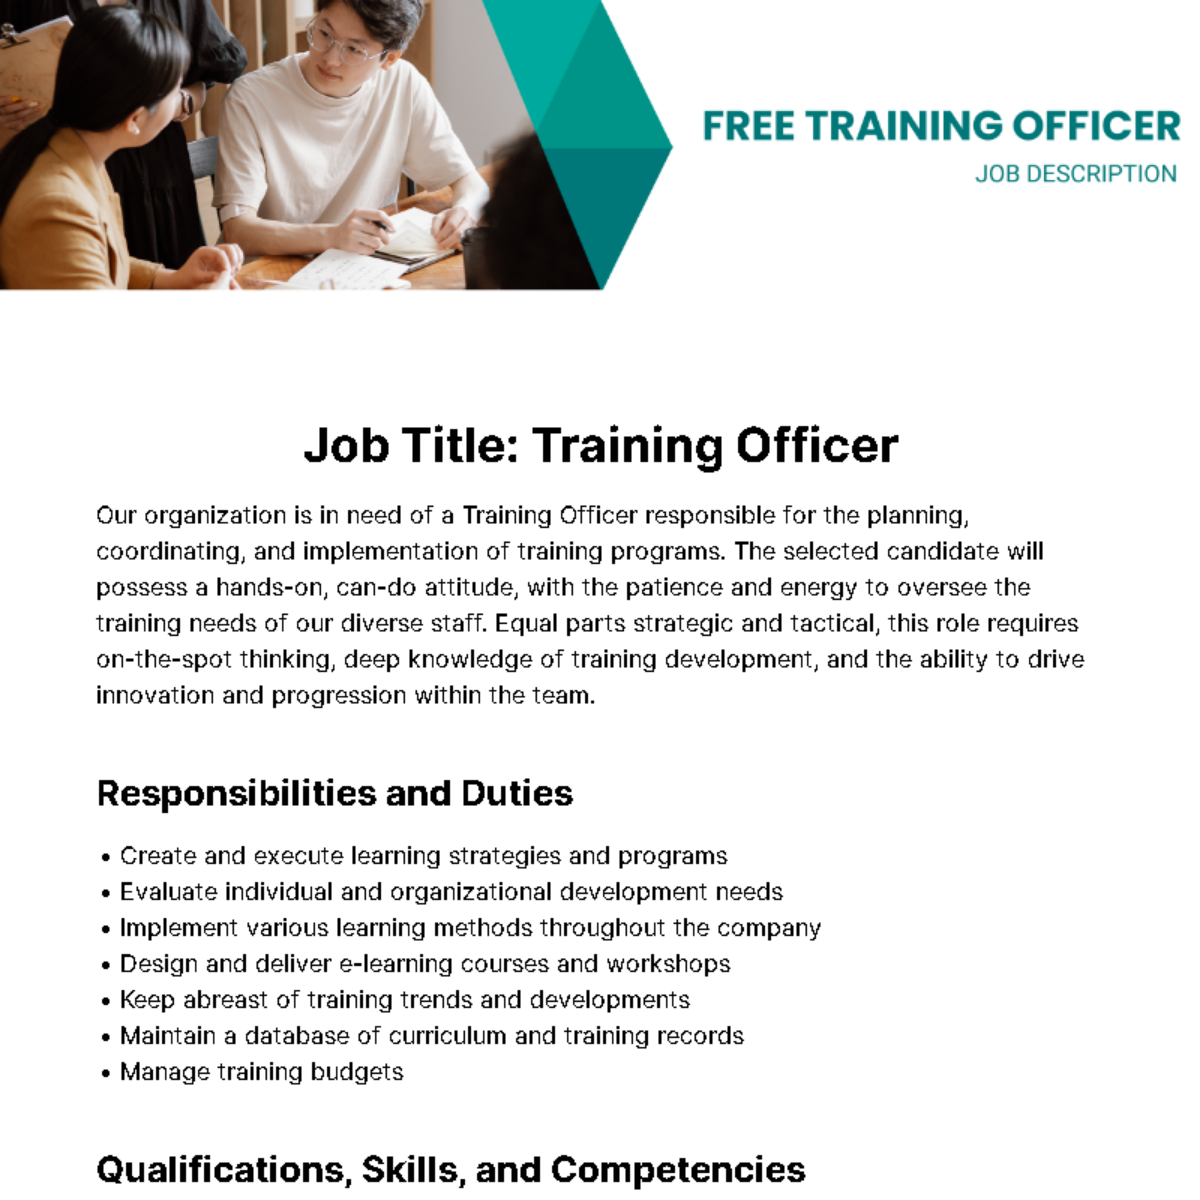 Free Training Officer Job Description Template